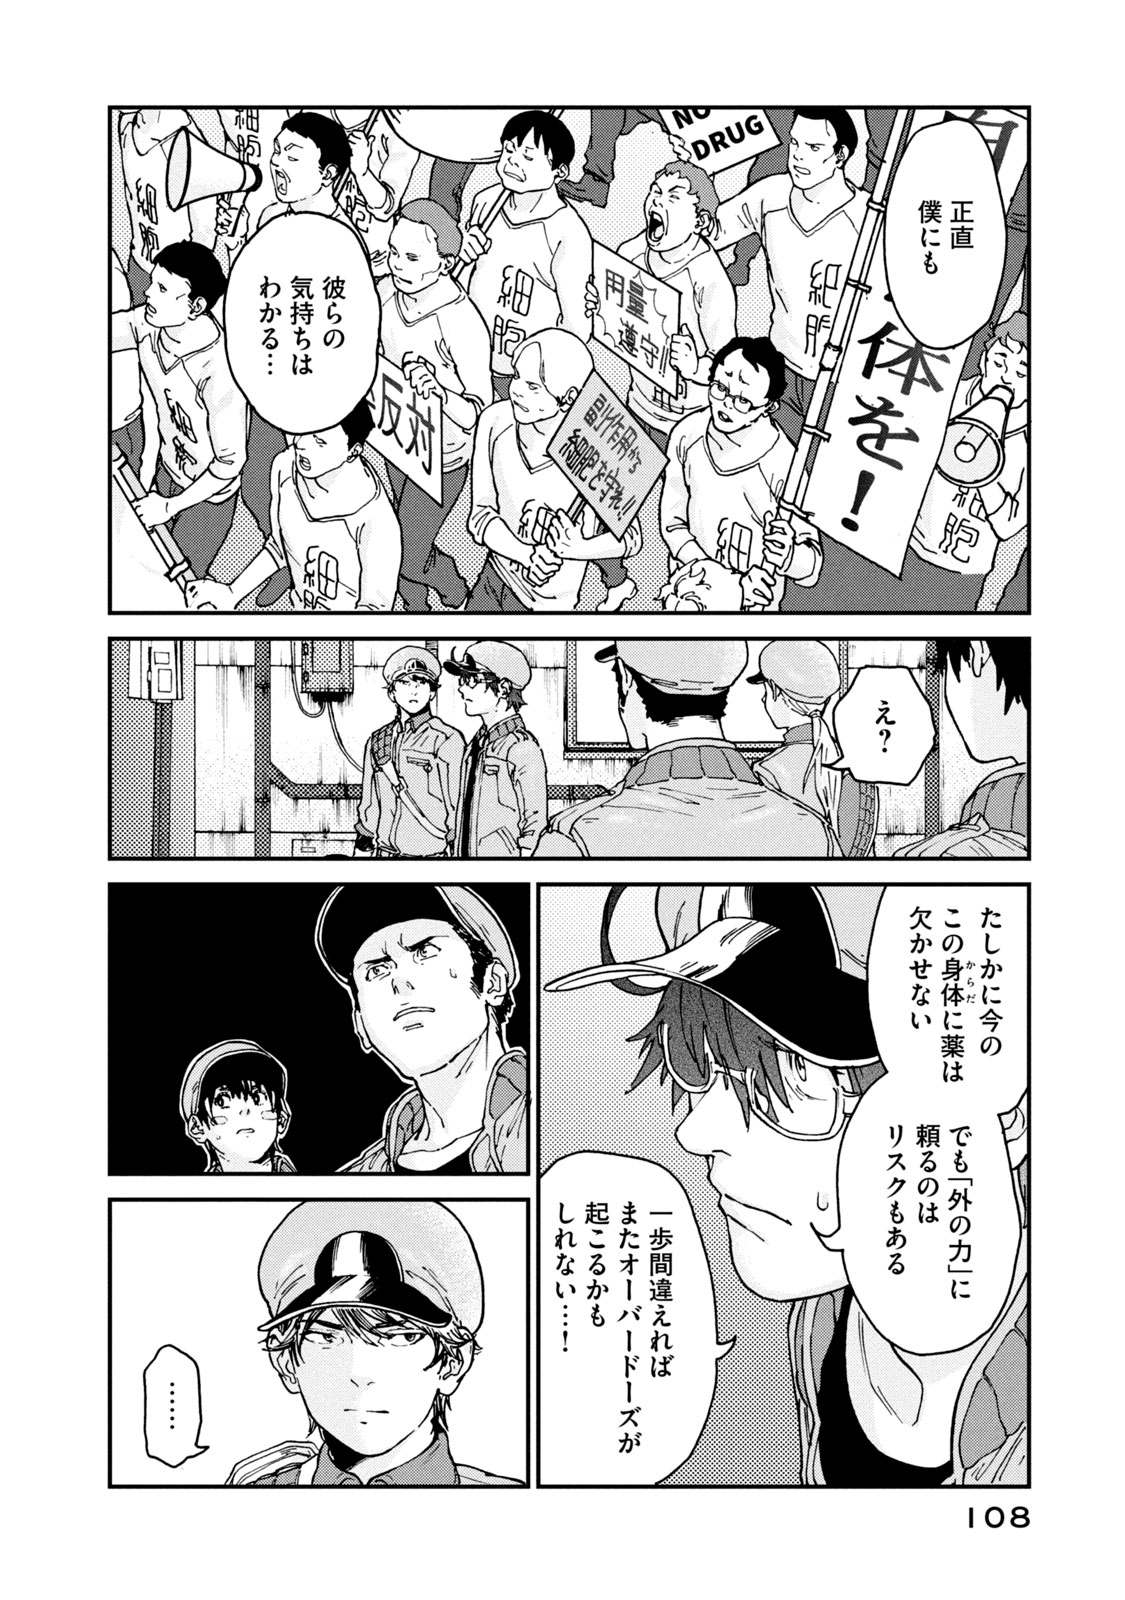 Hataraku Saibou BLACK - Chapter 35 - Page 16